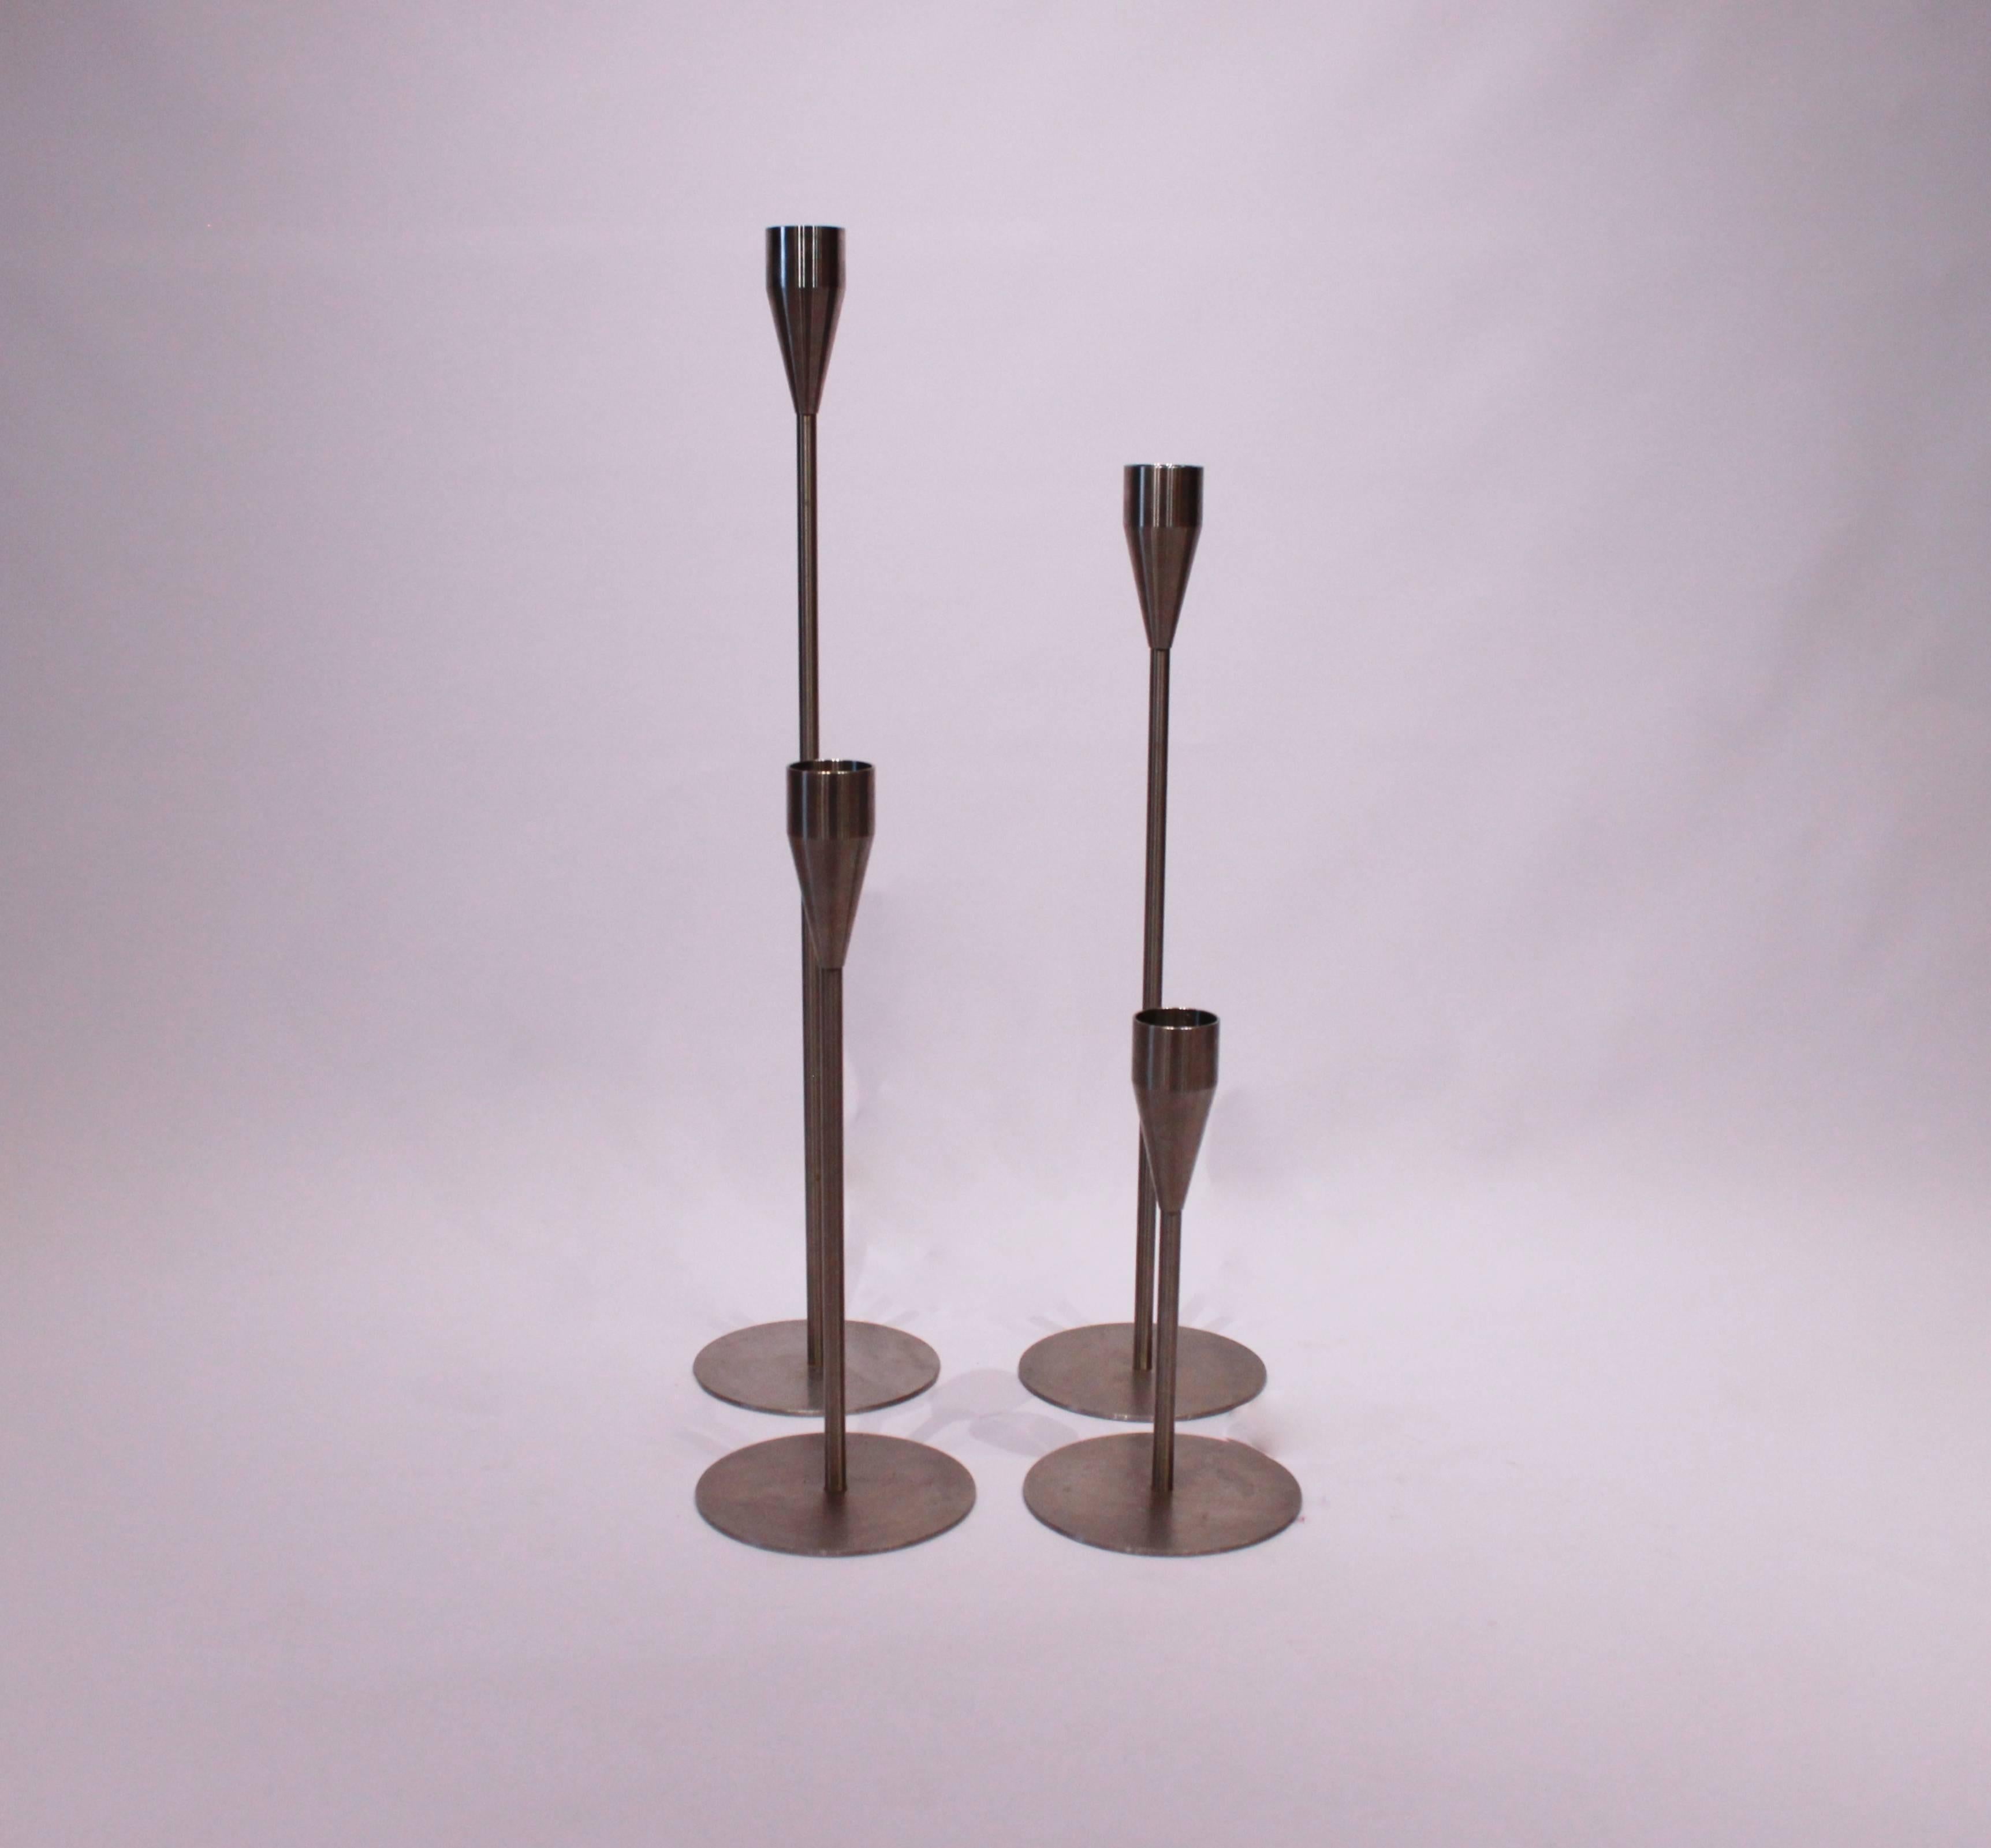 Set of four Piet Hein Maxi candlesticks, Saturn, Jupiter, Venus and Mars, in brushed steel.